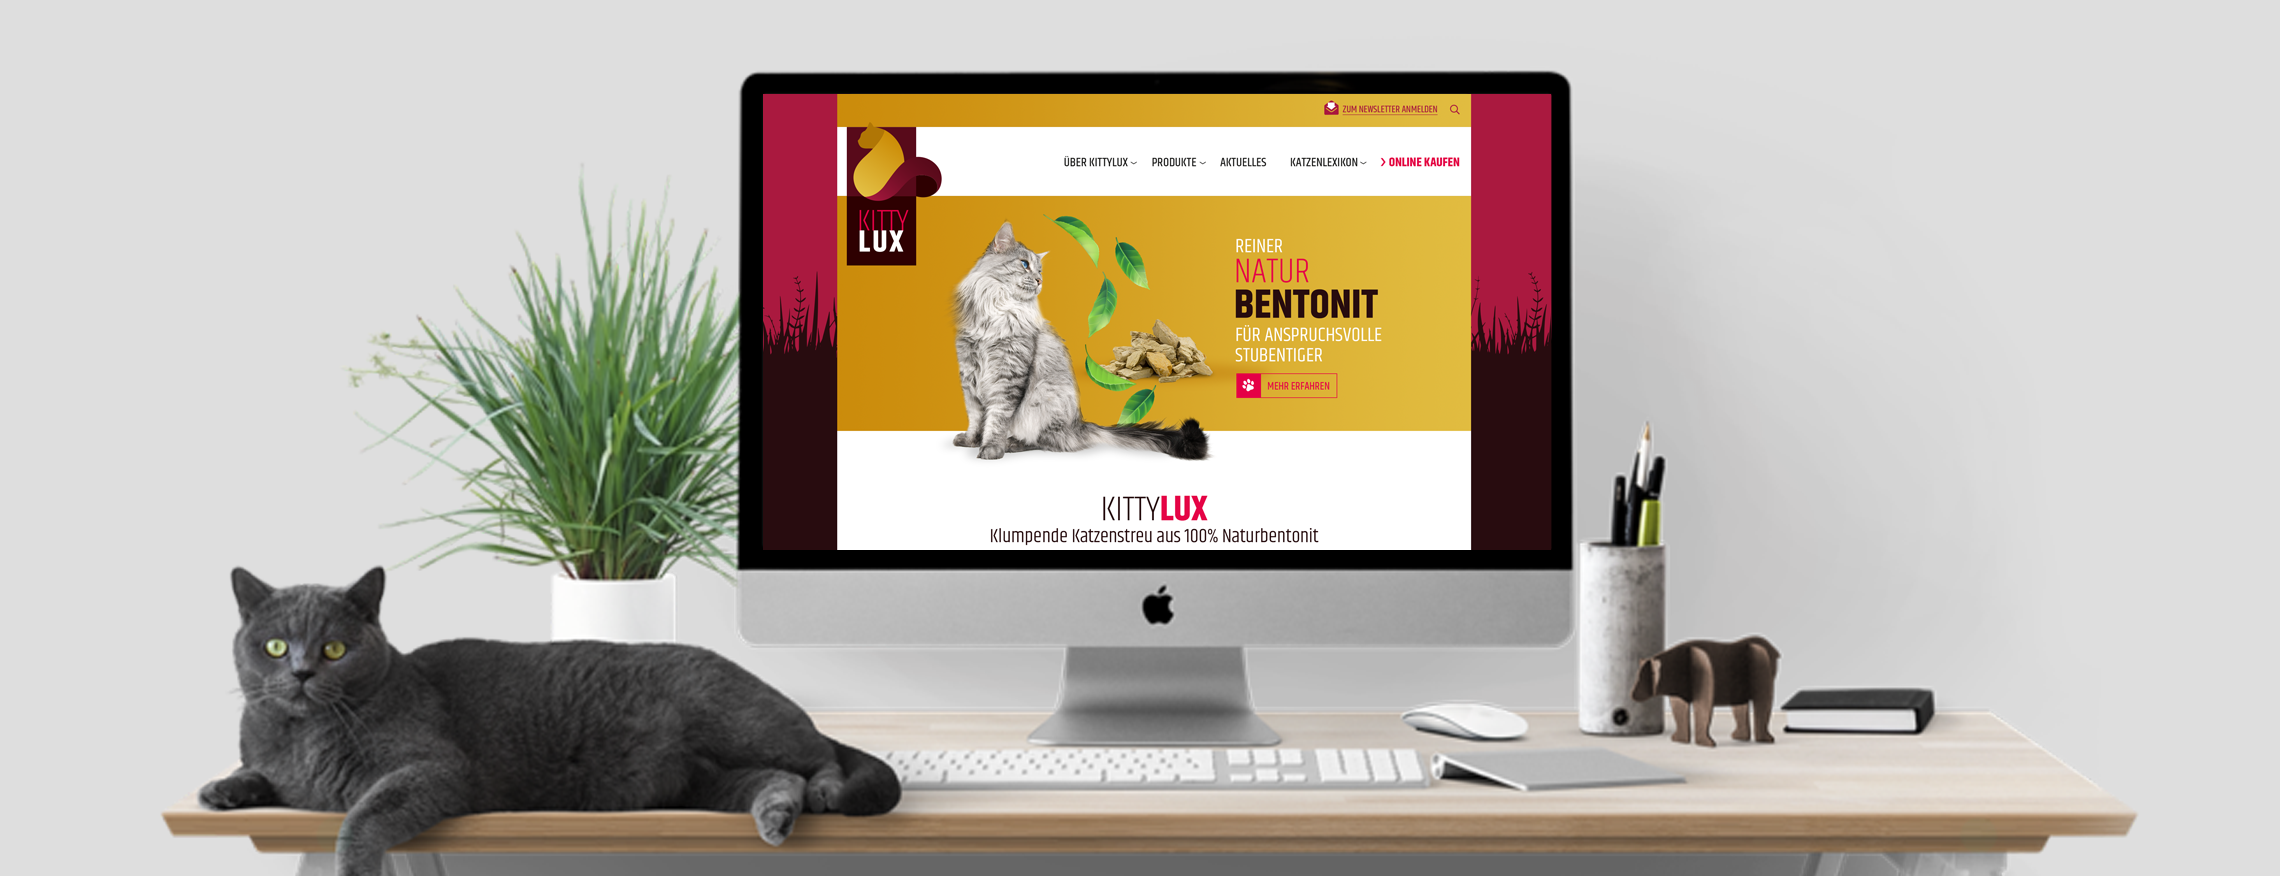 Kittylux-Website-Webdesign-Katzenstreu